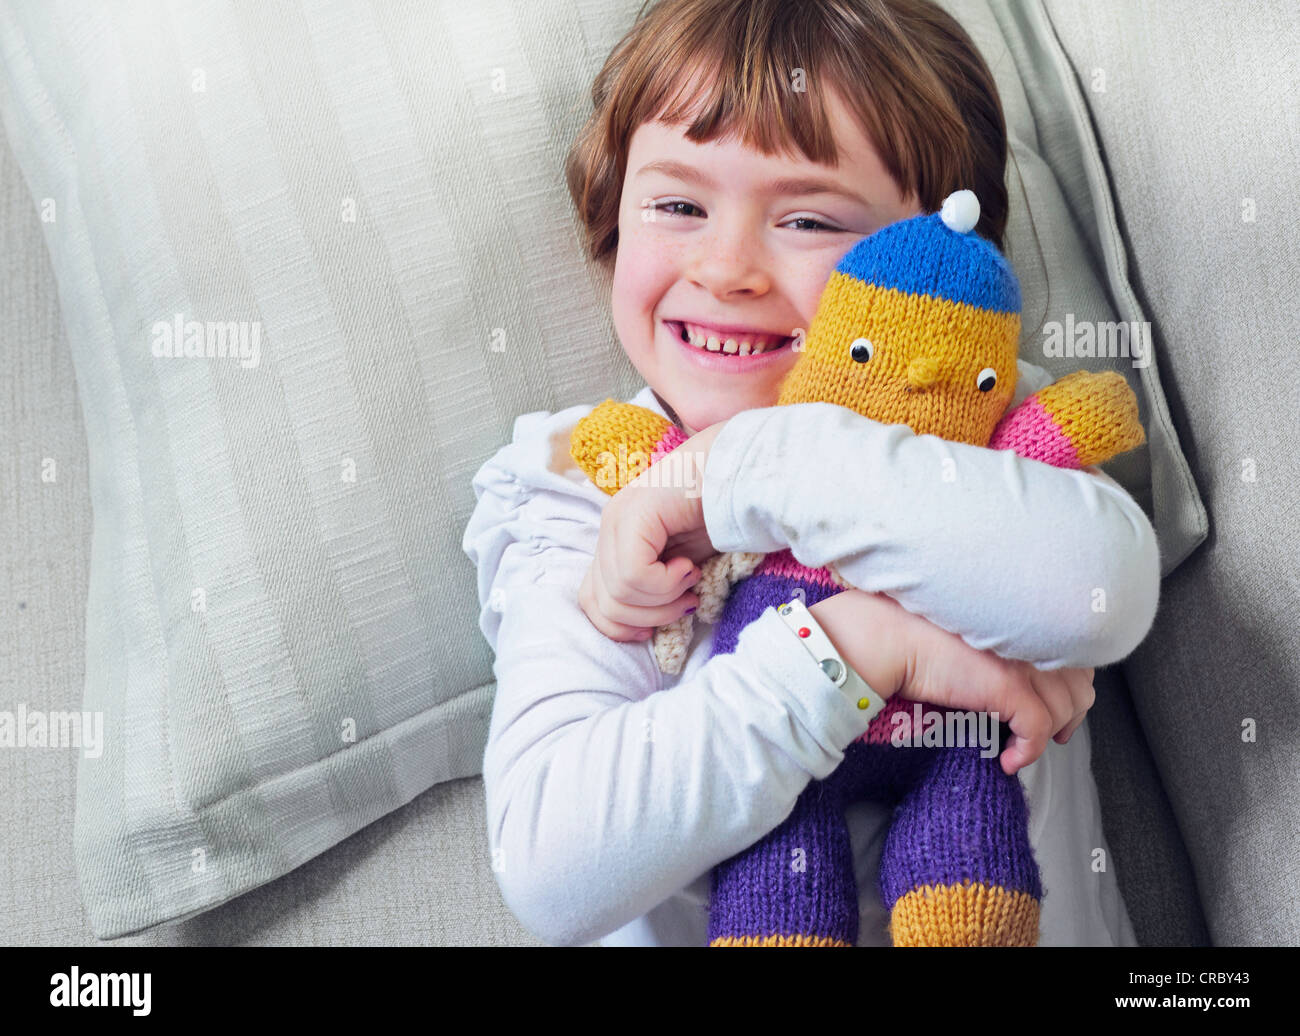 Girl hugging stuffed animal on sofa Stock Photo